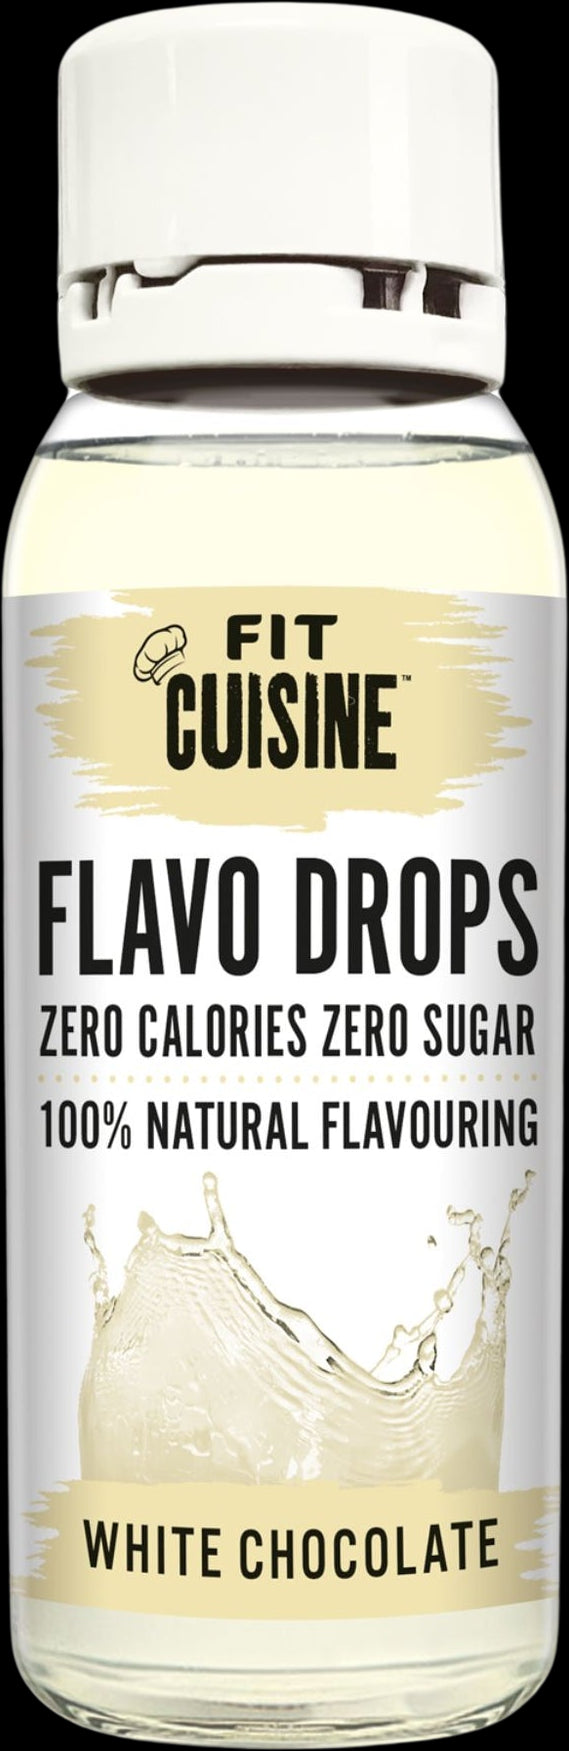 Fit Cusine Flavo Drops | Zero Calories - Zero Sugar - 100% Natural Flavoring